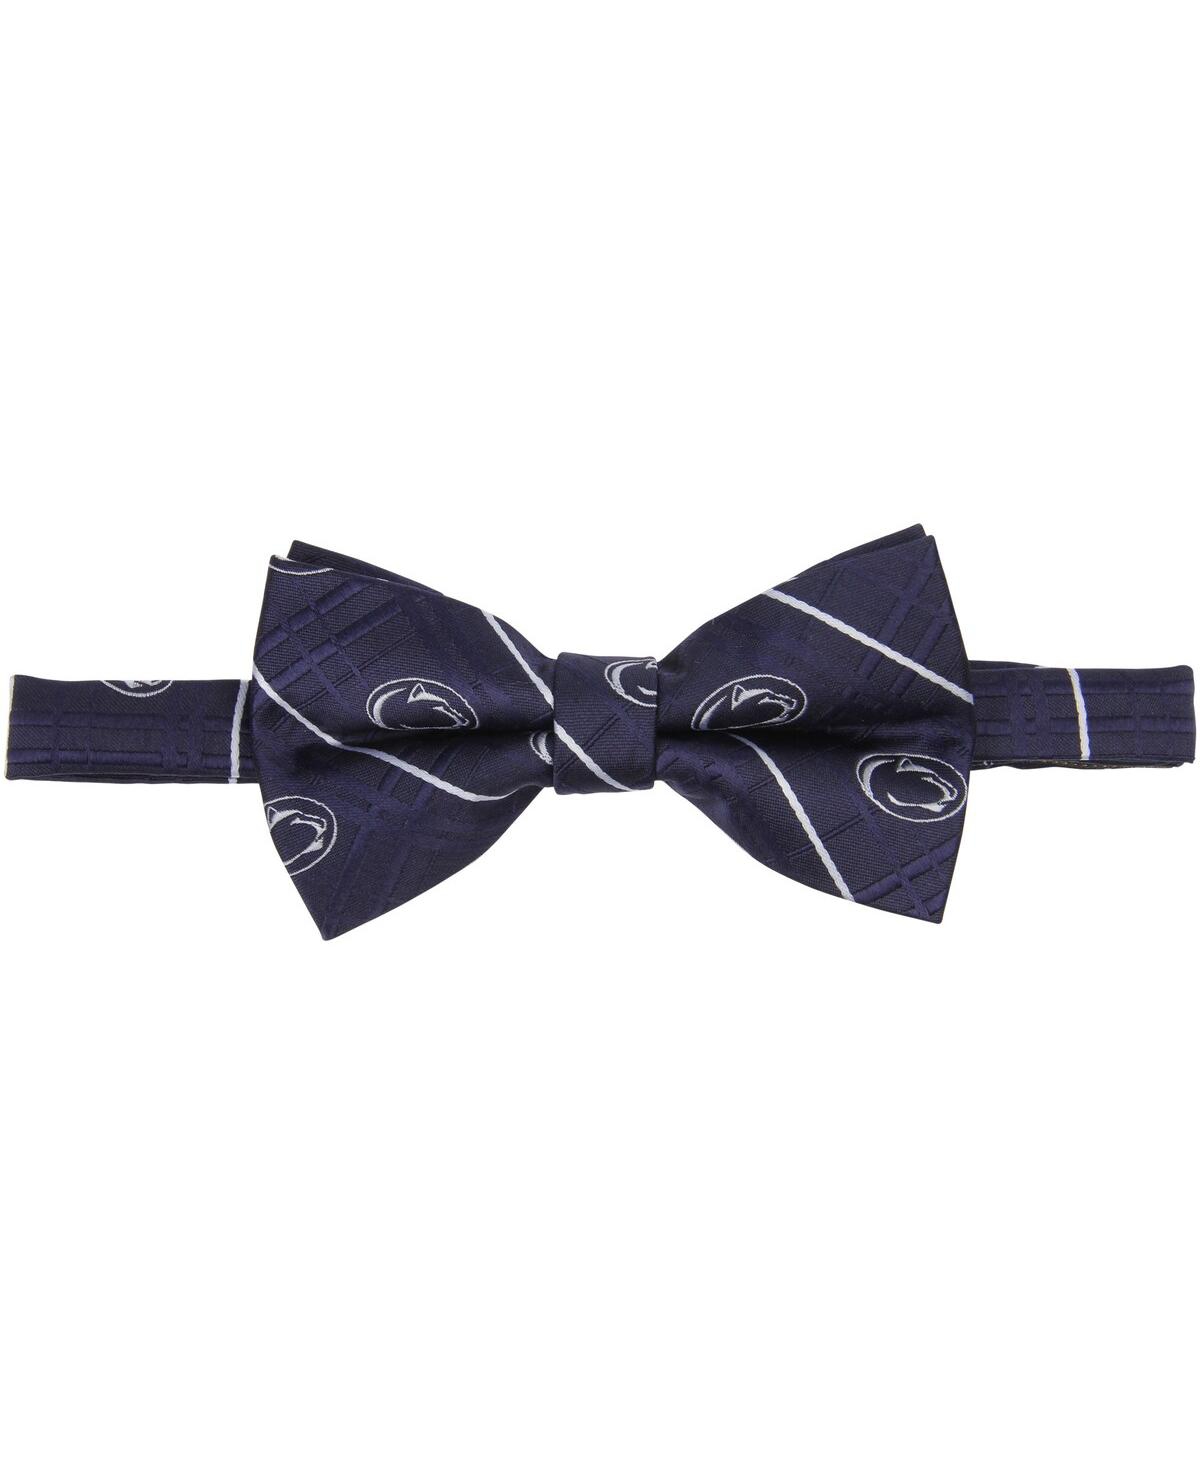 Men's Ncaa Oxford Bow Tie - Indiana Hoosiers